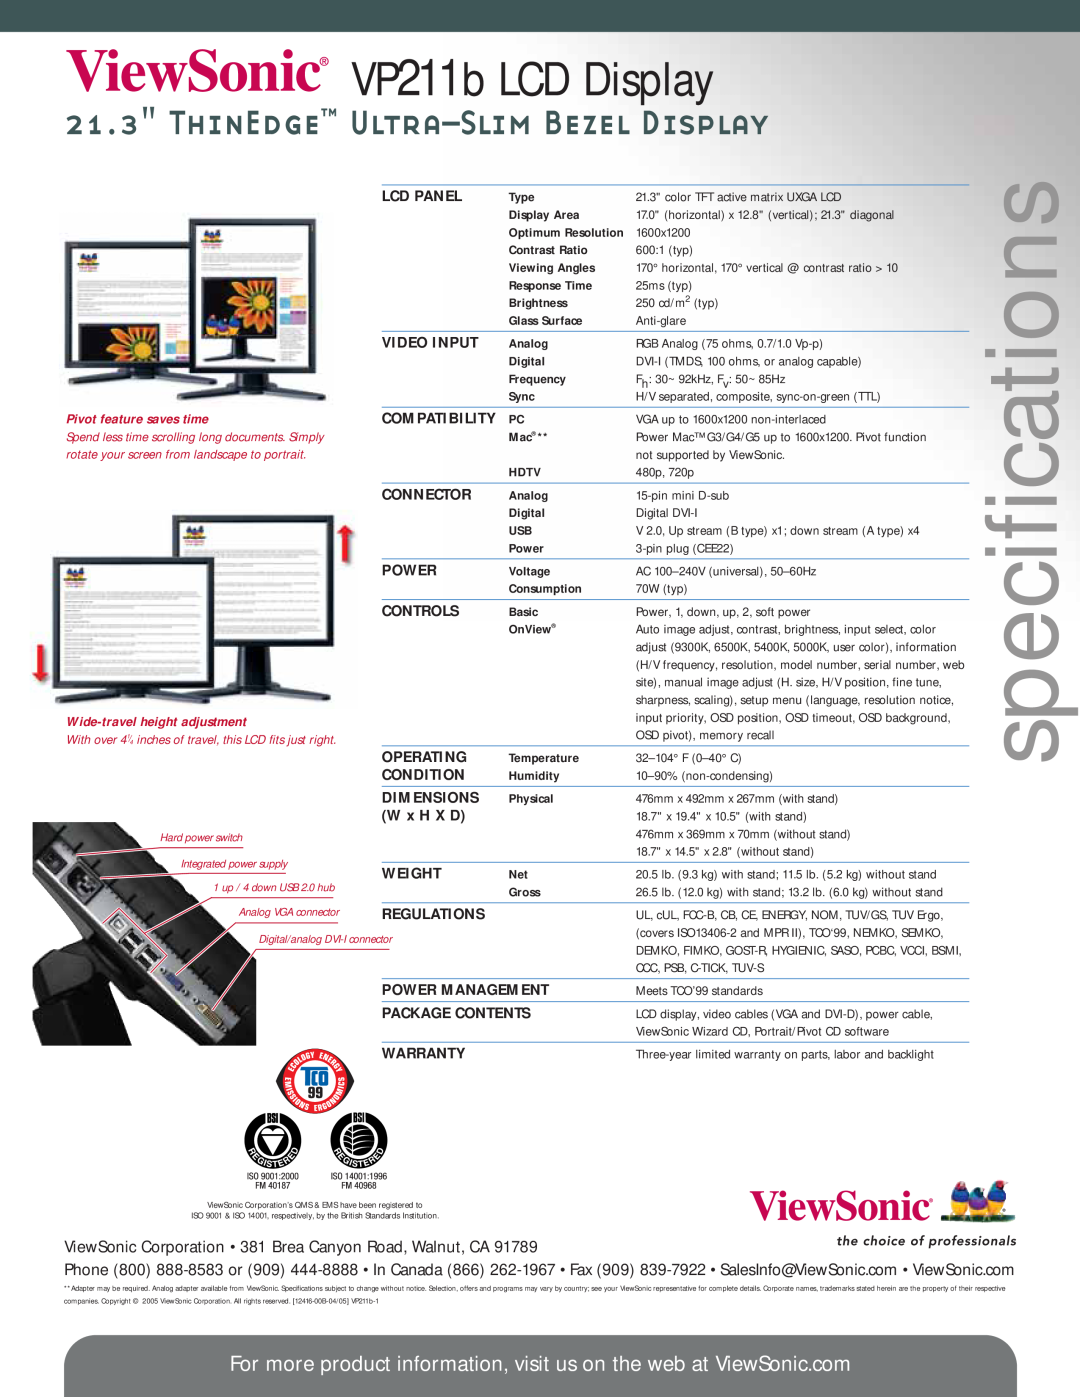 ViewSonic 211B manual specifications, VP211b LCD Display, ThinEdge Ultra-SlimBezel Display, Pivot feature saves time 